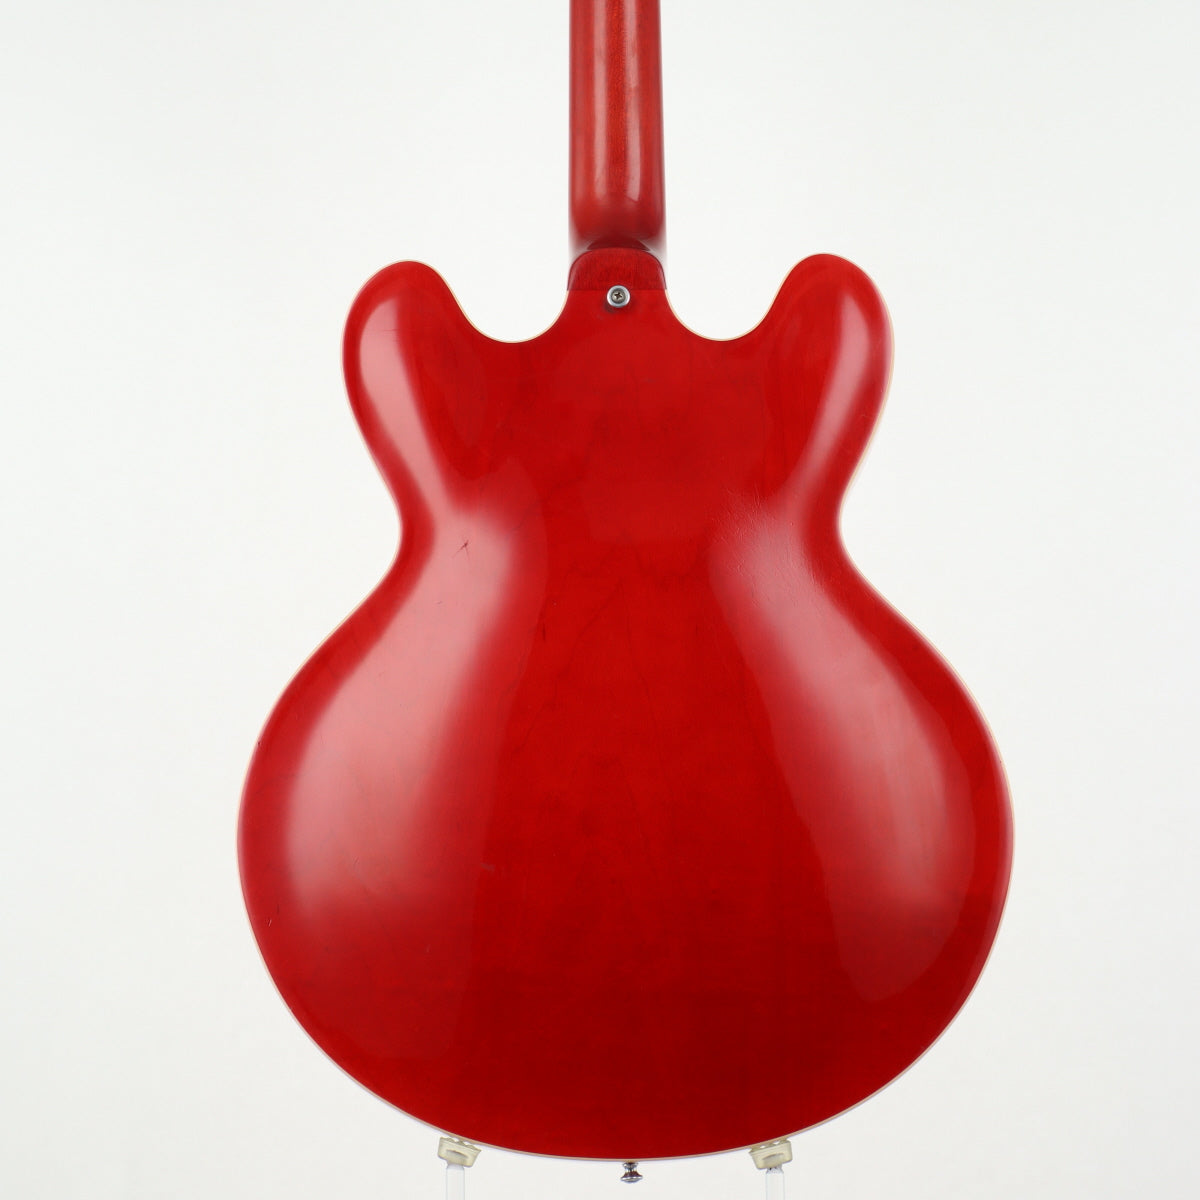 [SN 11213710] USED Gibson Memphis / ESDP-335 Cherry [11]